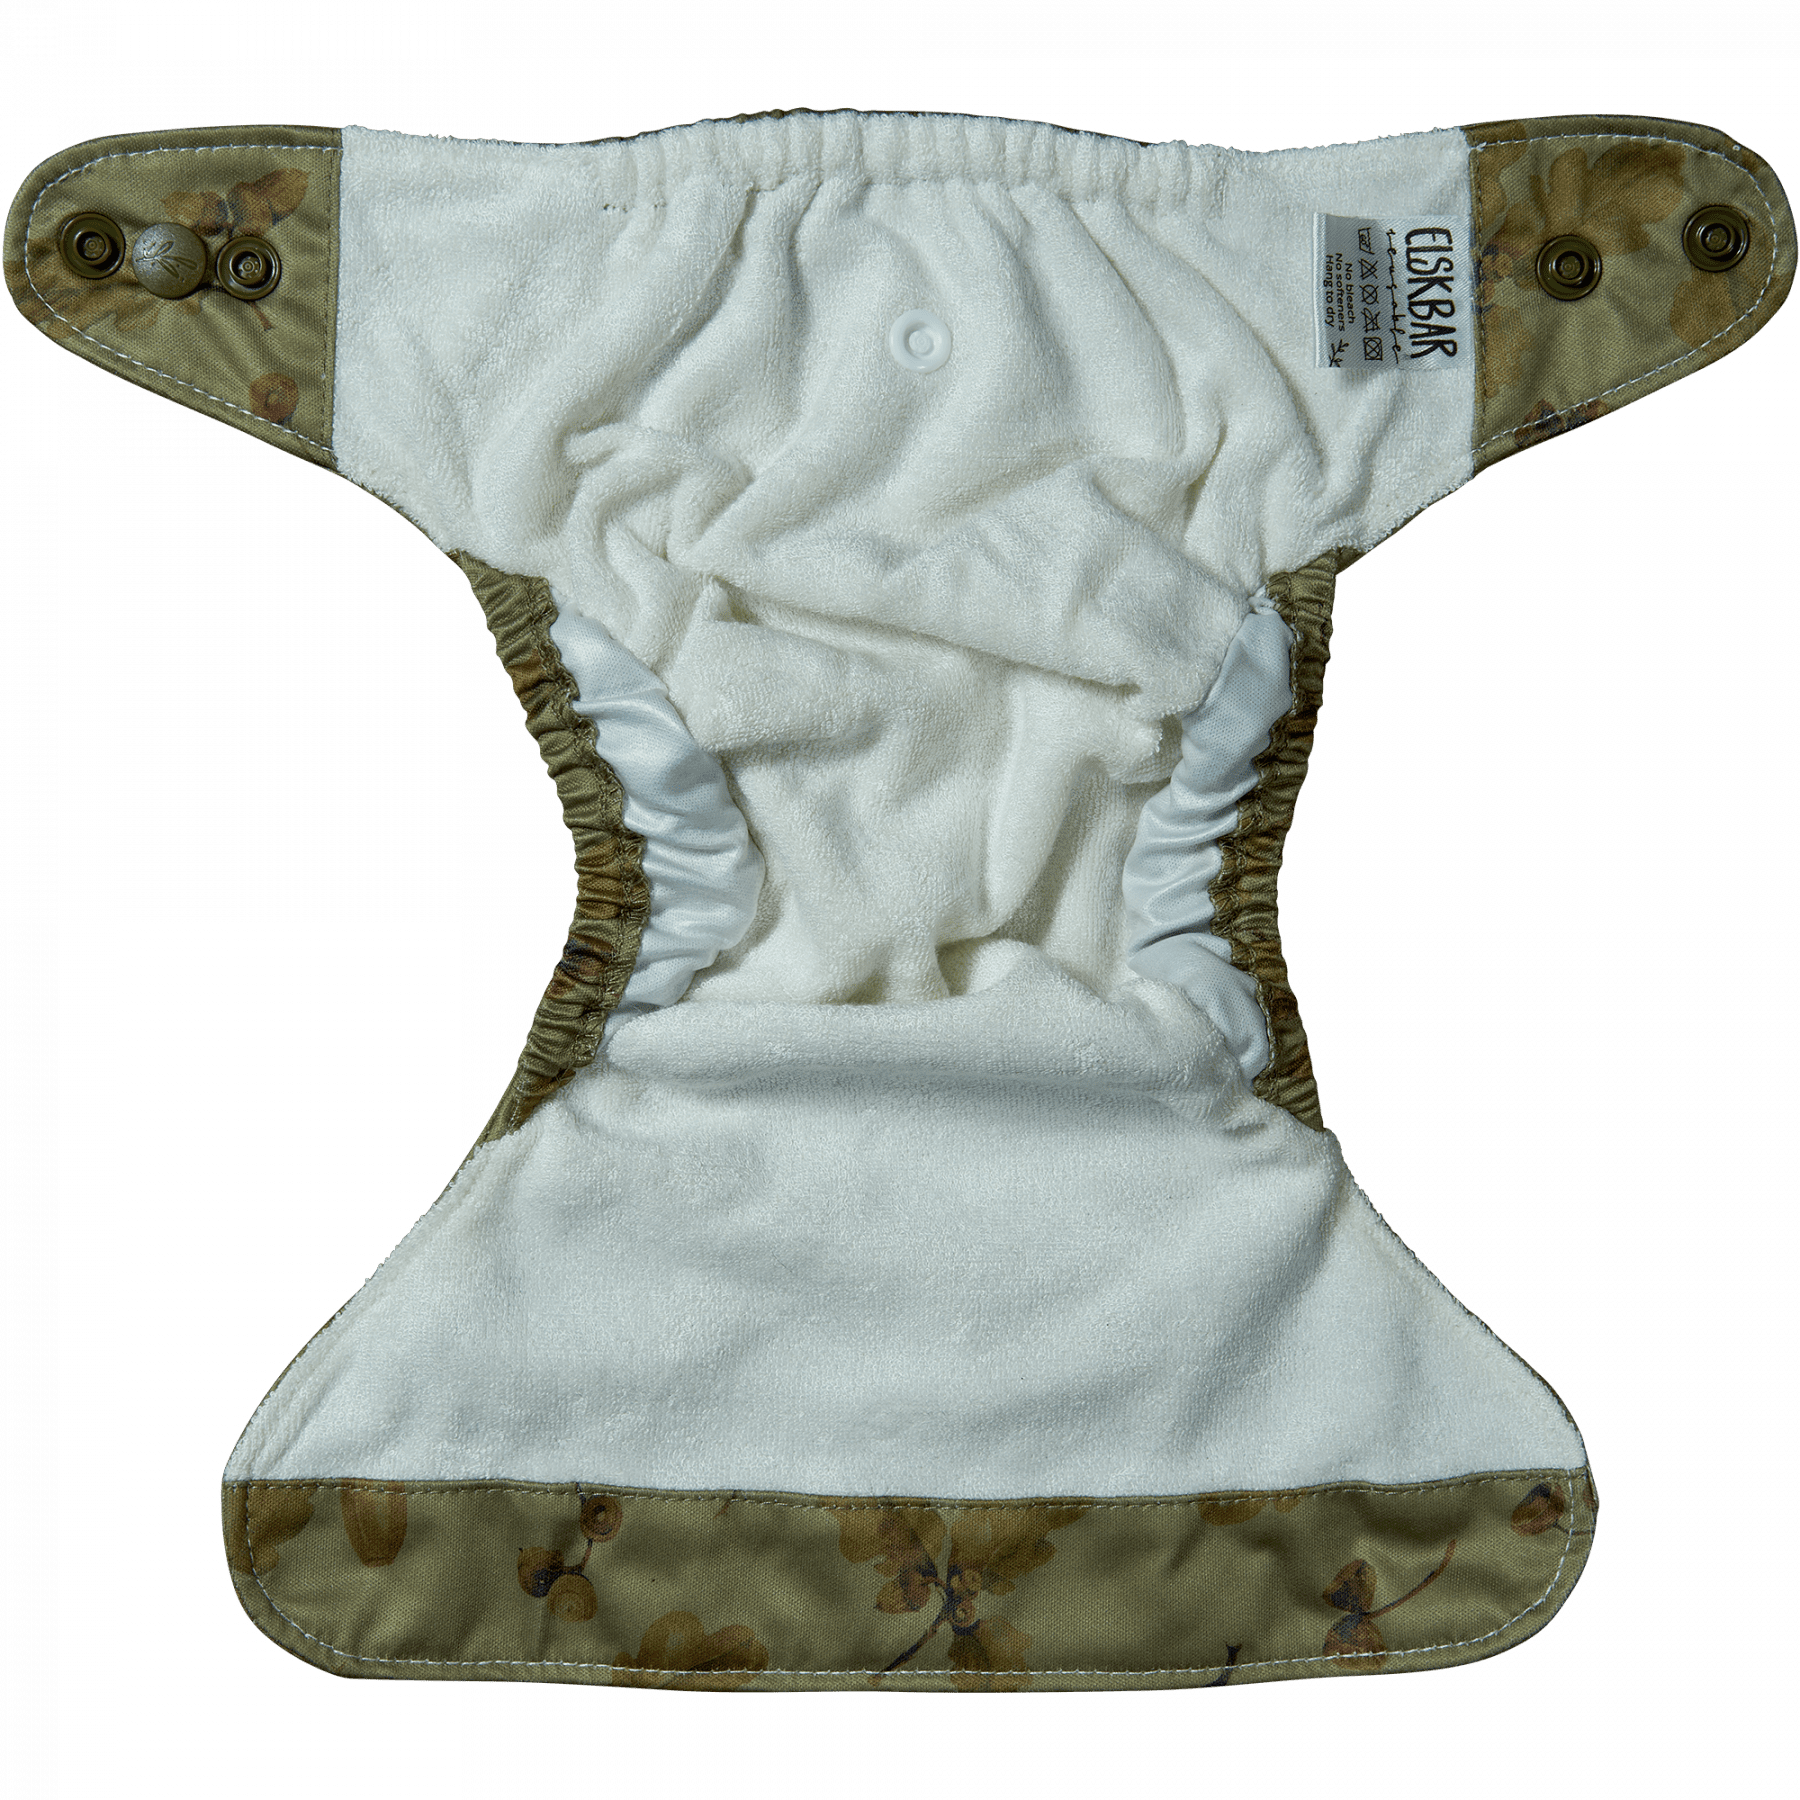 Natural Newborn - Acorn - Freshly Fed cloth diaper - Inside